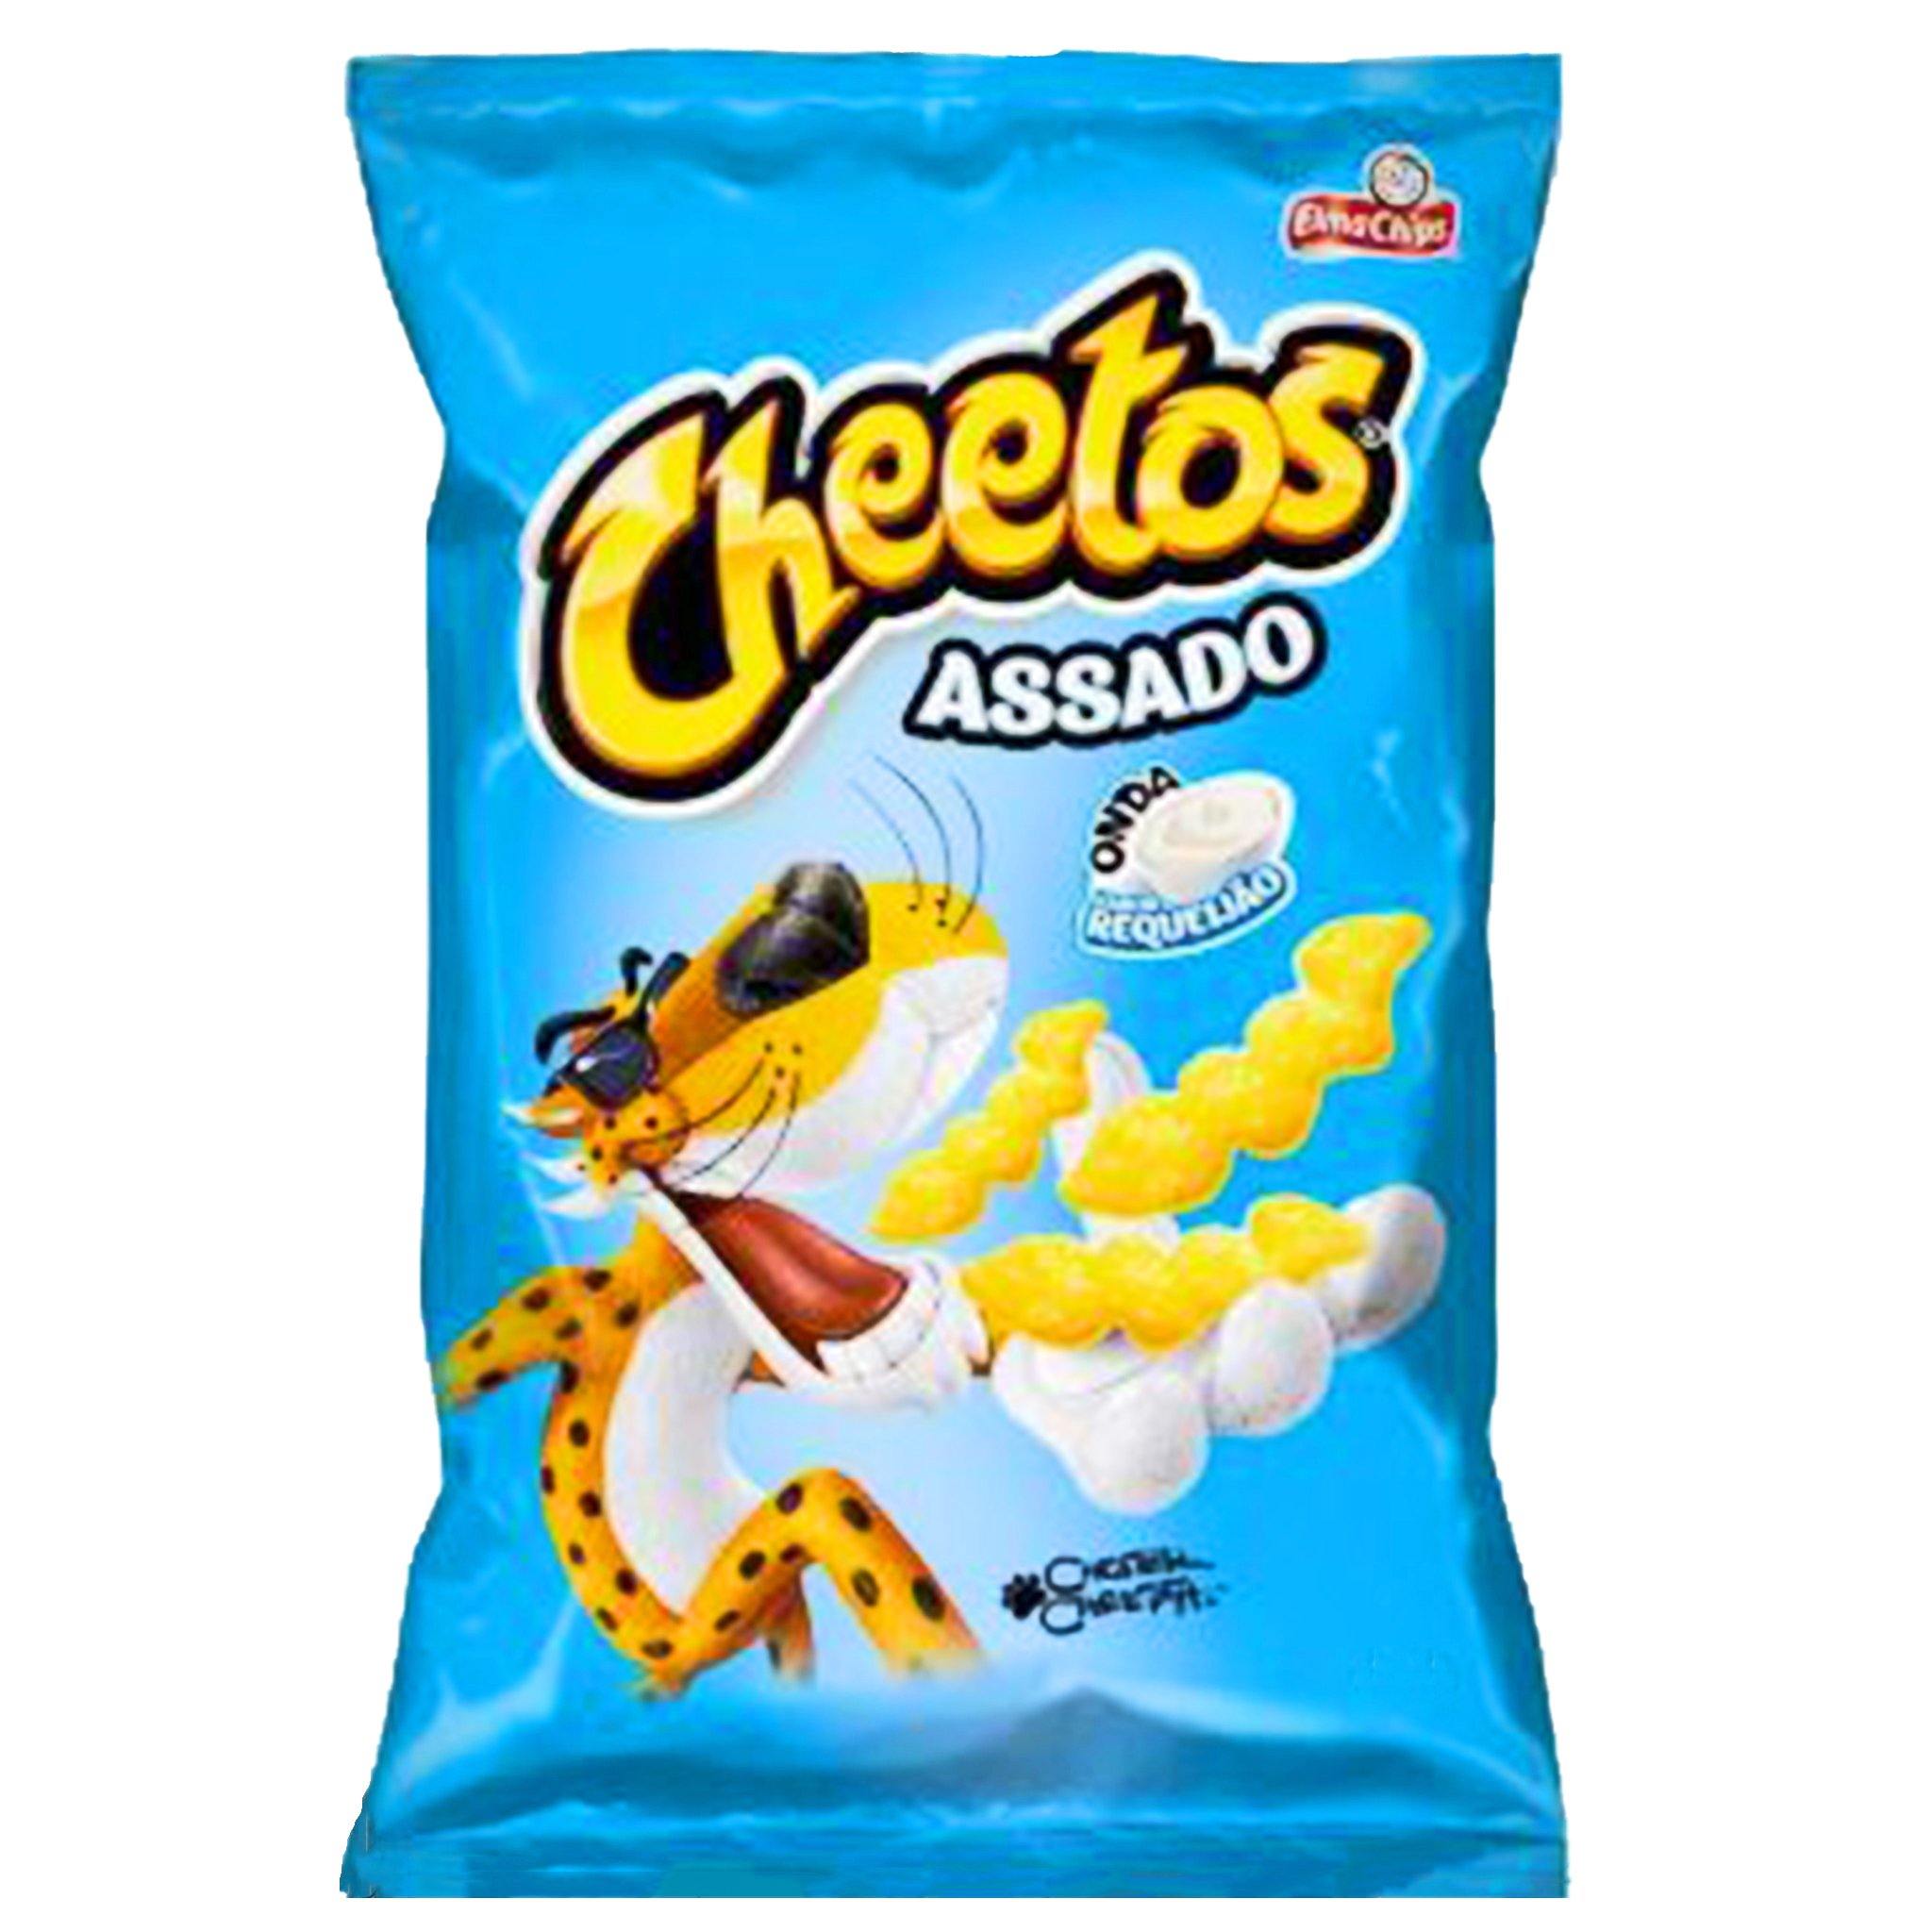 Cheetos Assado Onda Requeijão - Brazil - Sweet Exotics